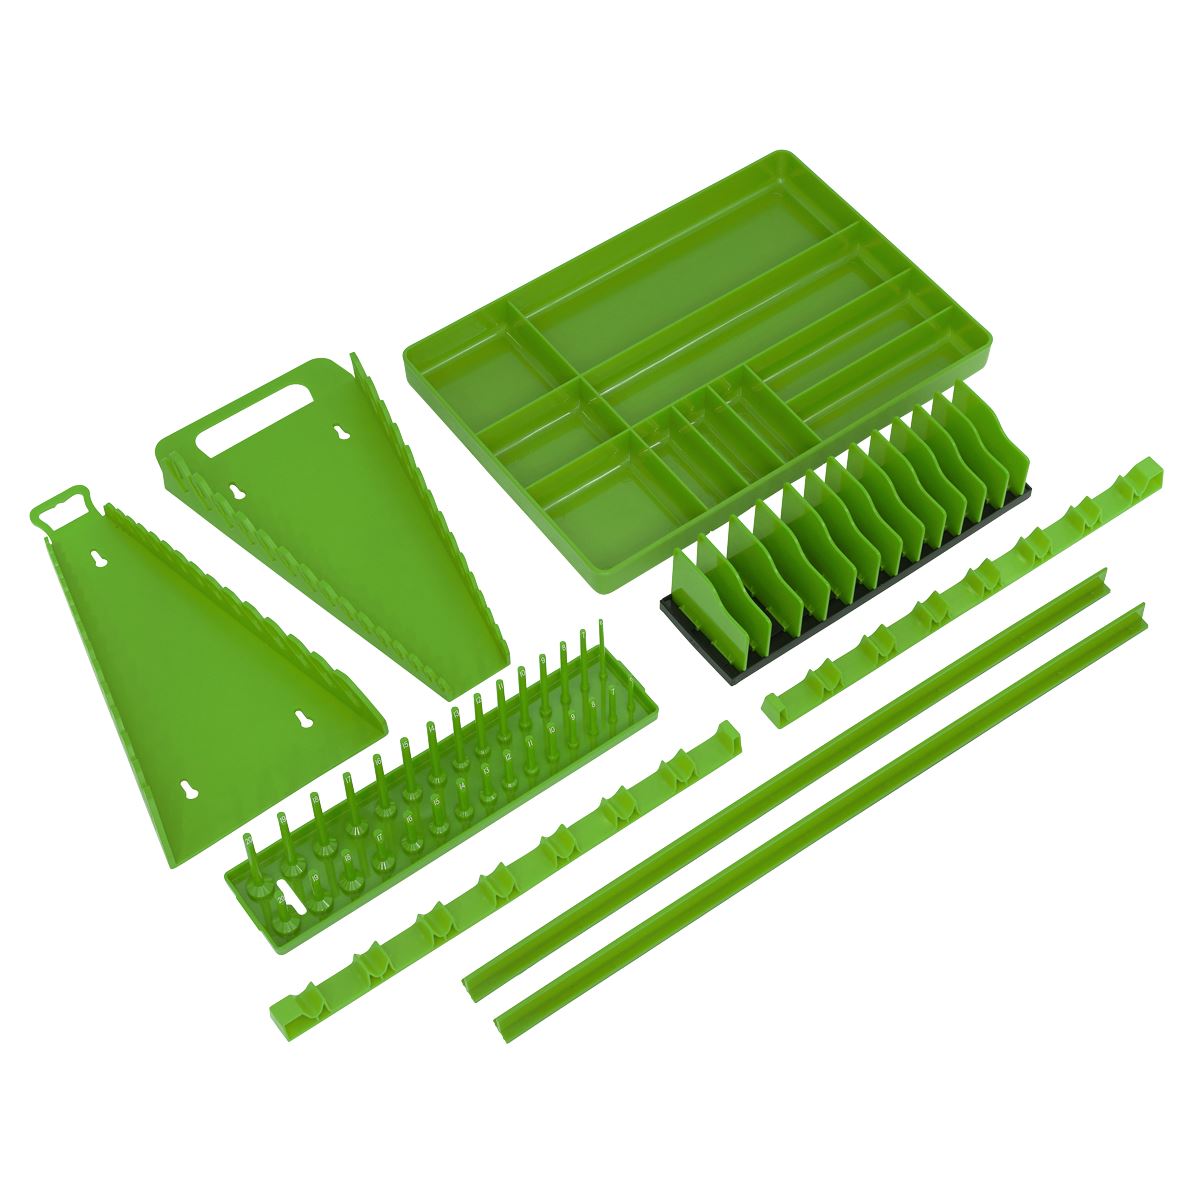 Sealey Premier Tool Storage Organizer Set 9pc - Hi-Vis Green